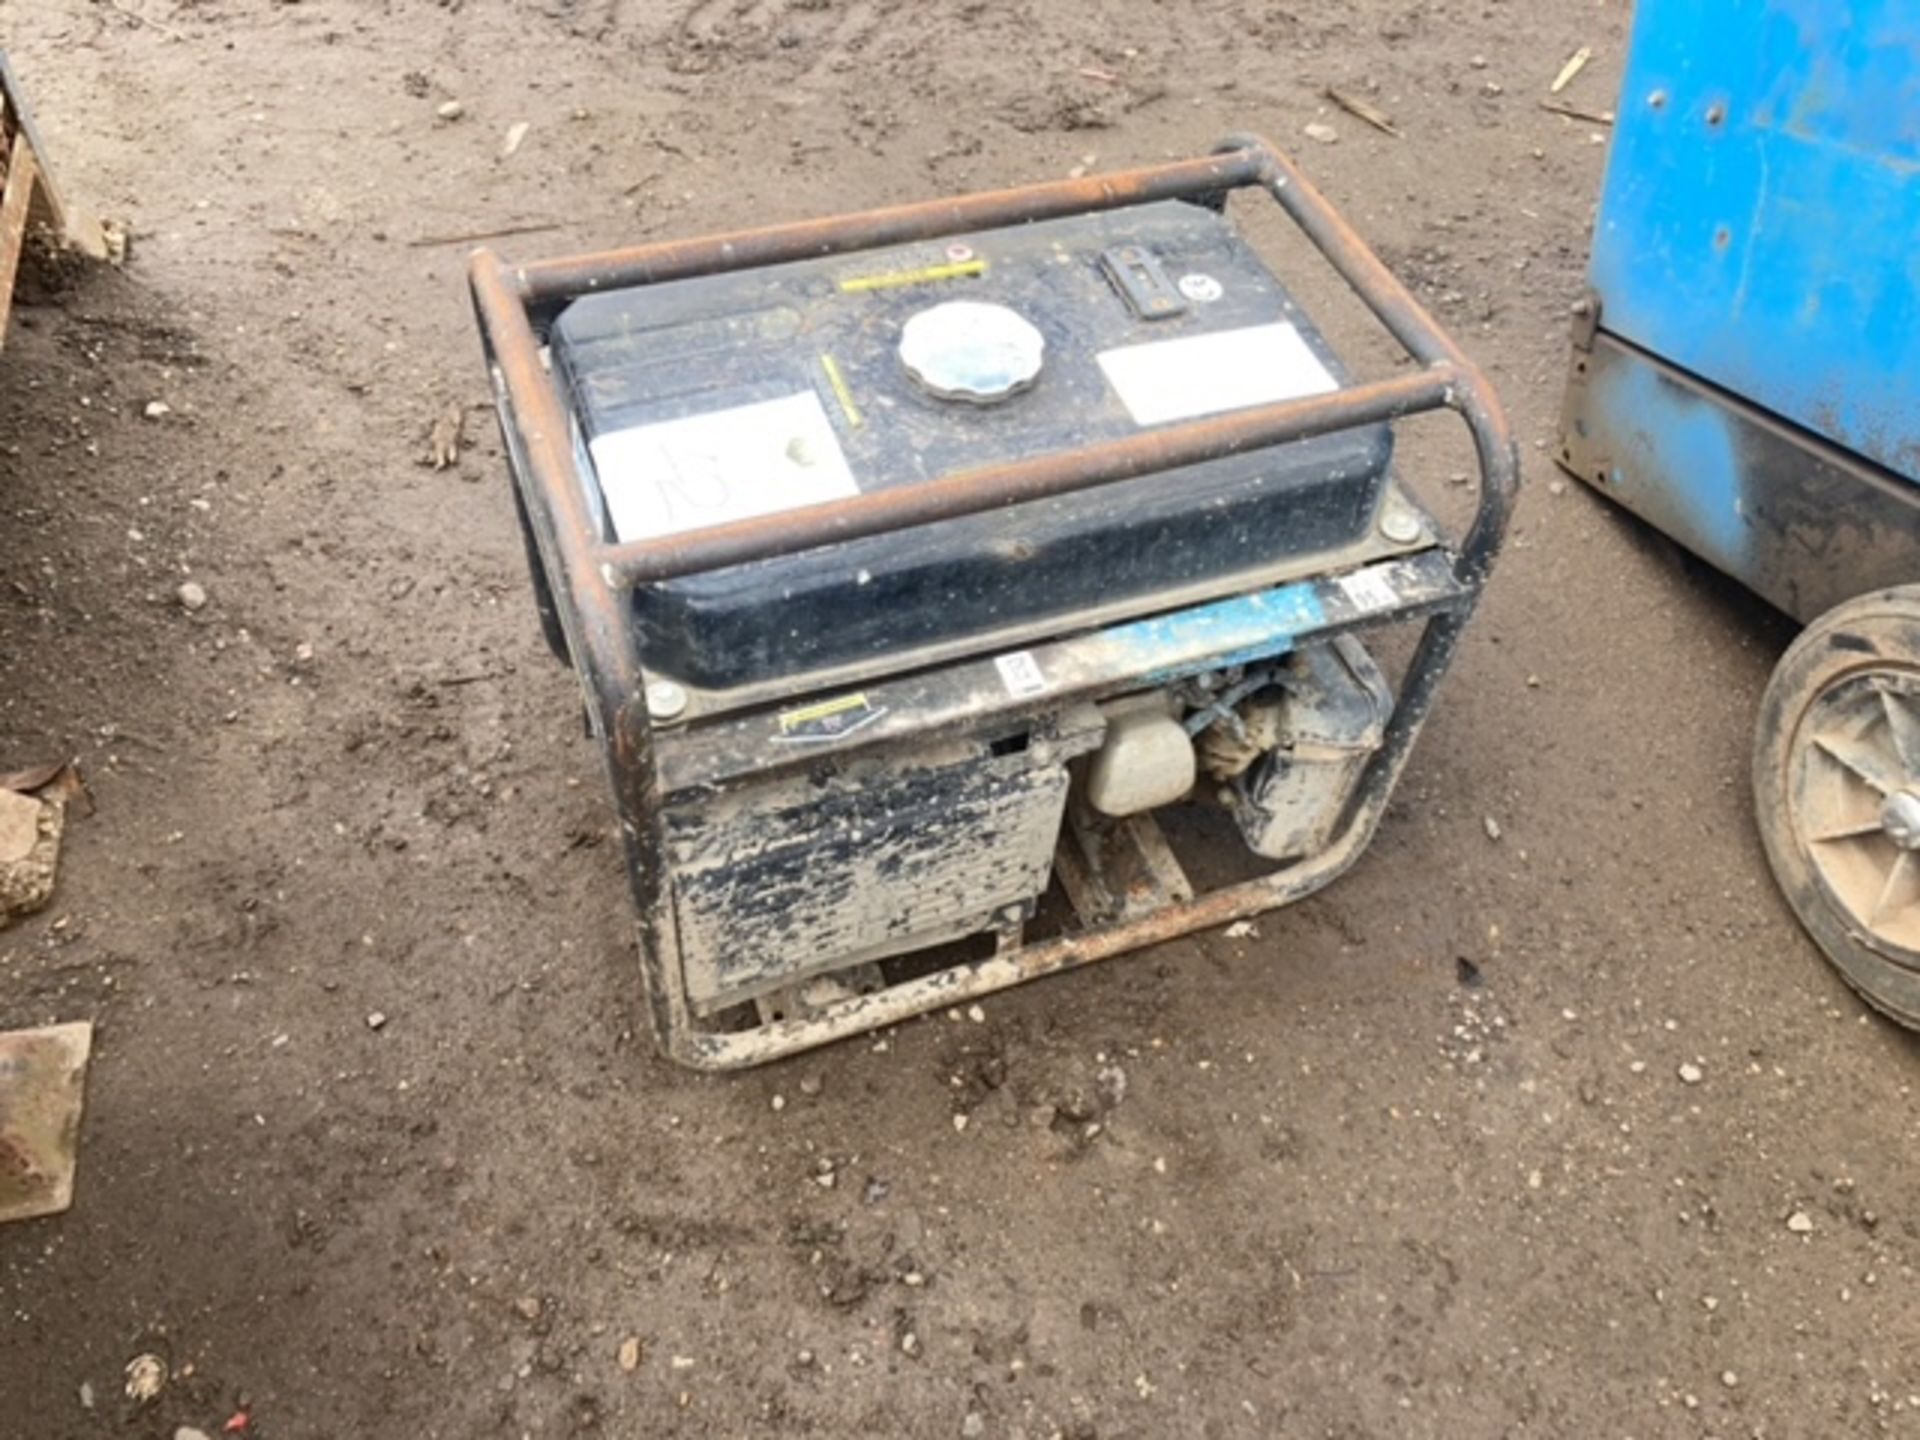 Portable generator - Image 2 of 3